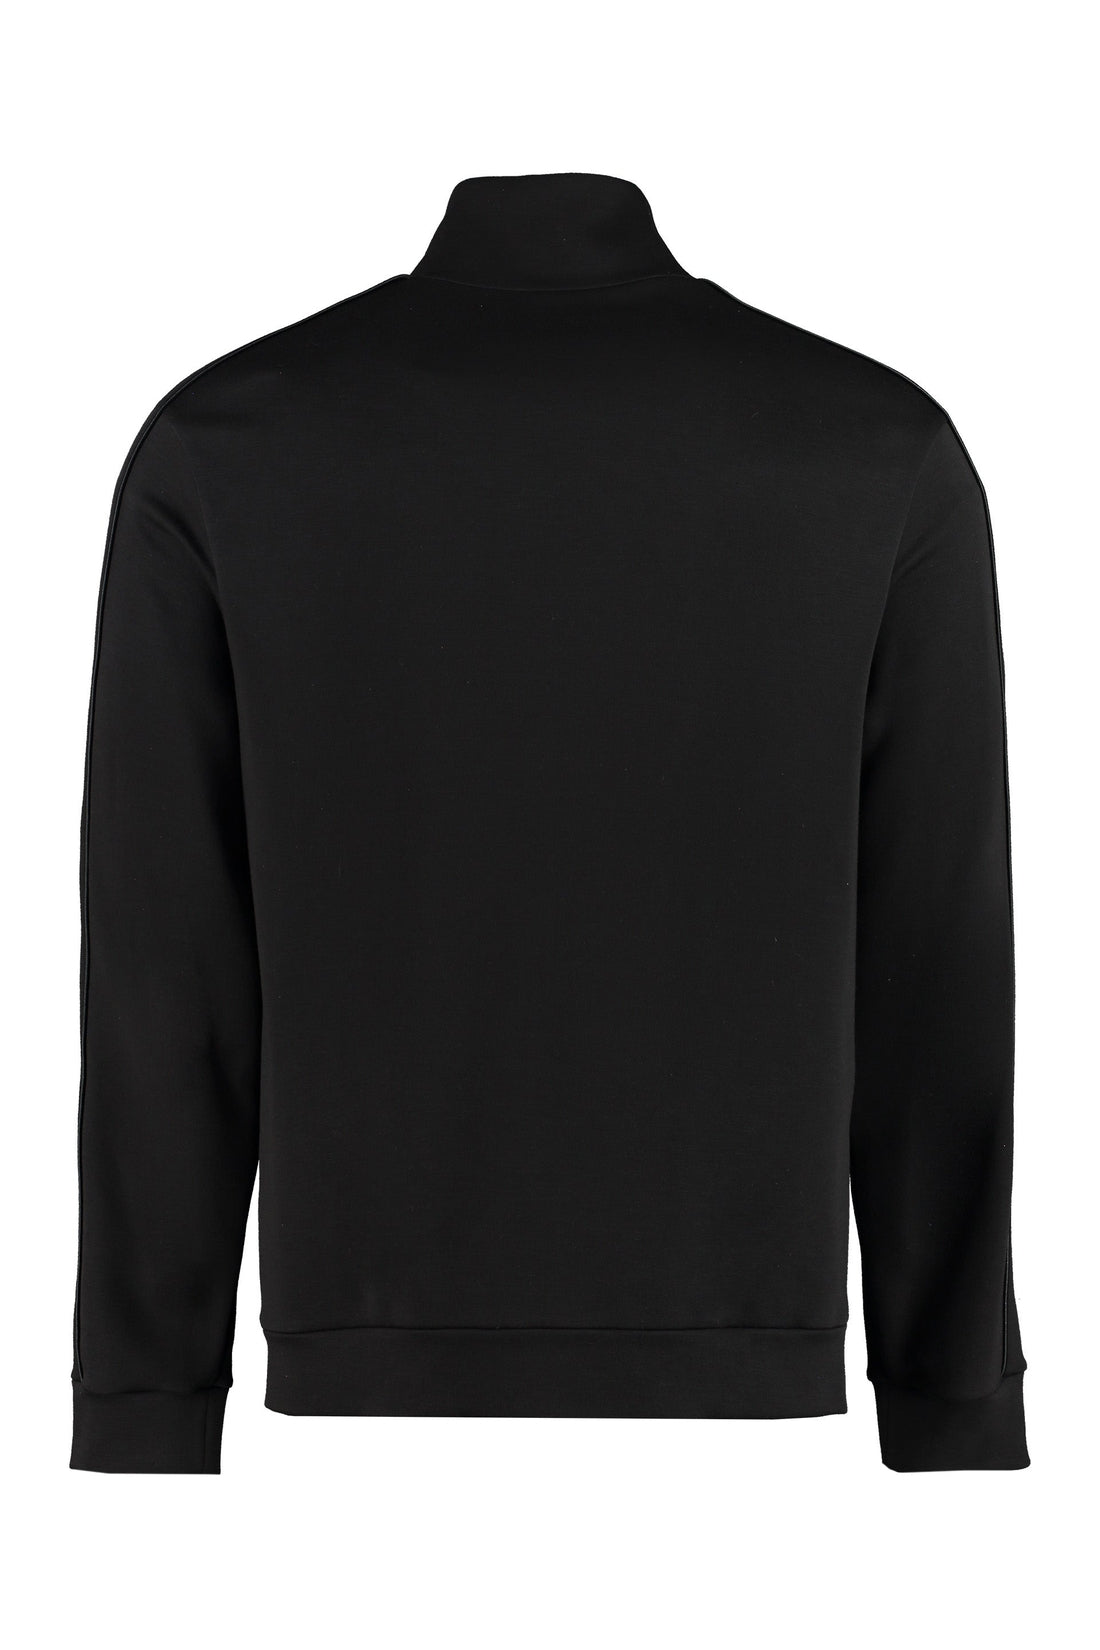 Giorgio Armani-OUTLET-SALE-Zippered sweatshirt-ARCHIVIST